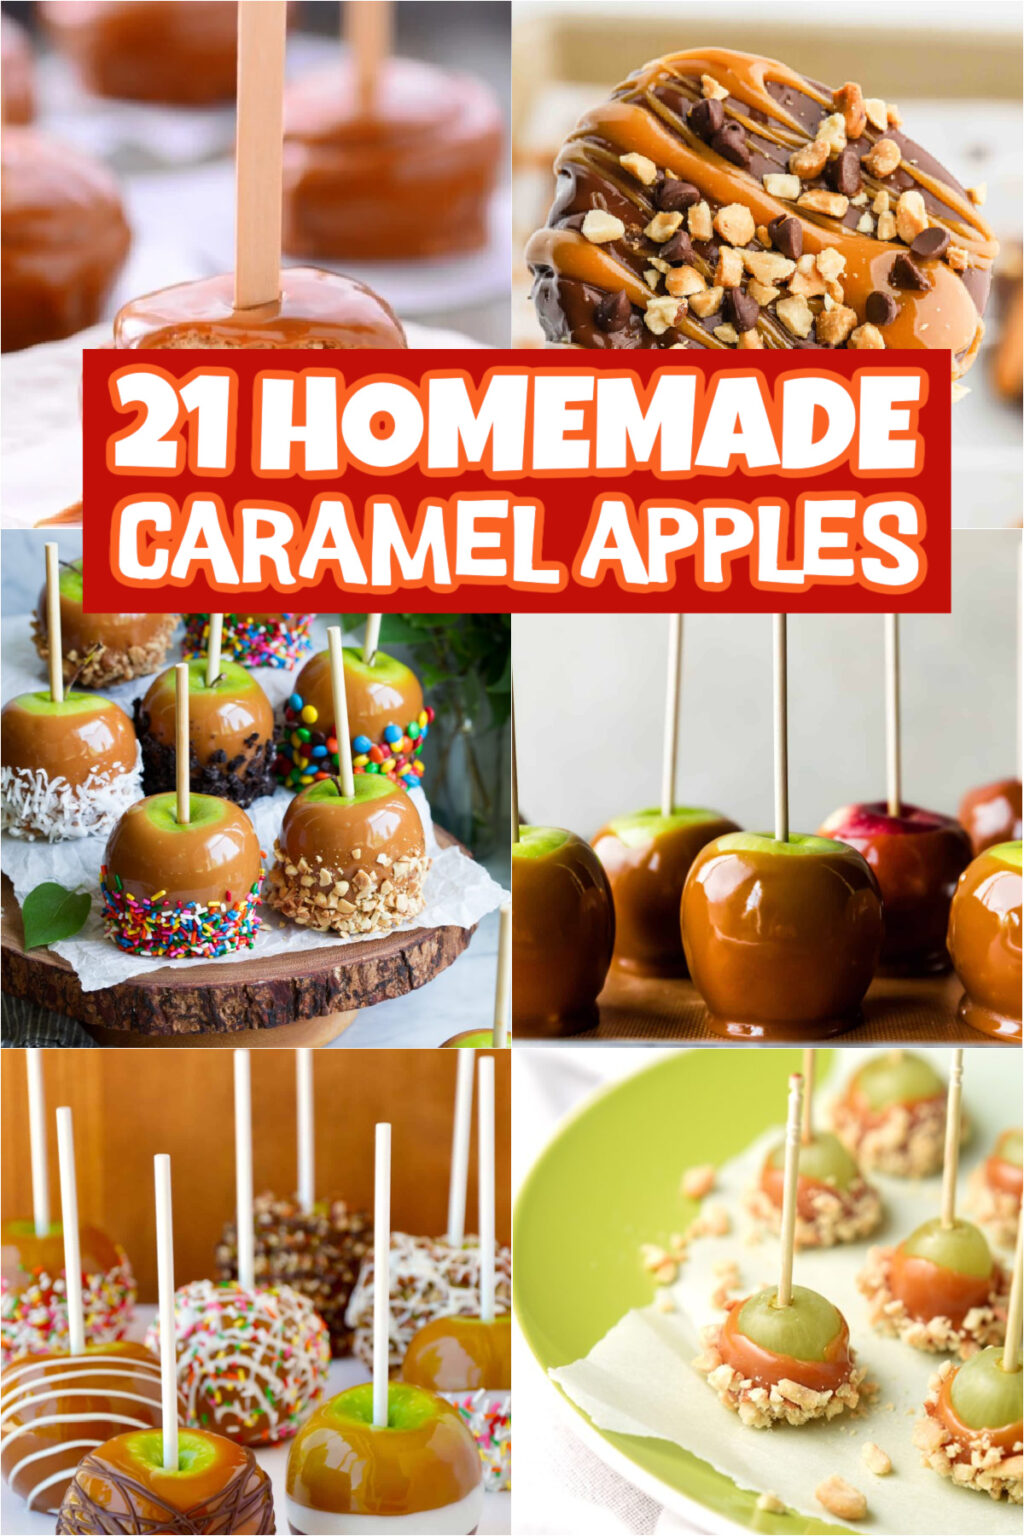 Homemade caramel apple recipes- Easy Caramel Apple Ideas!